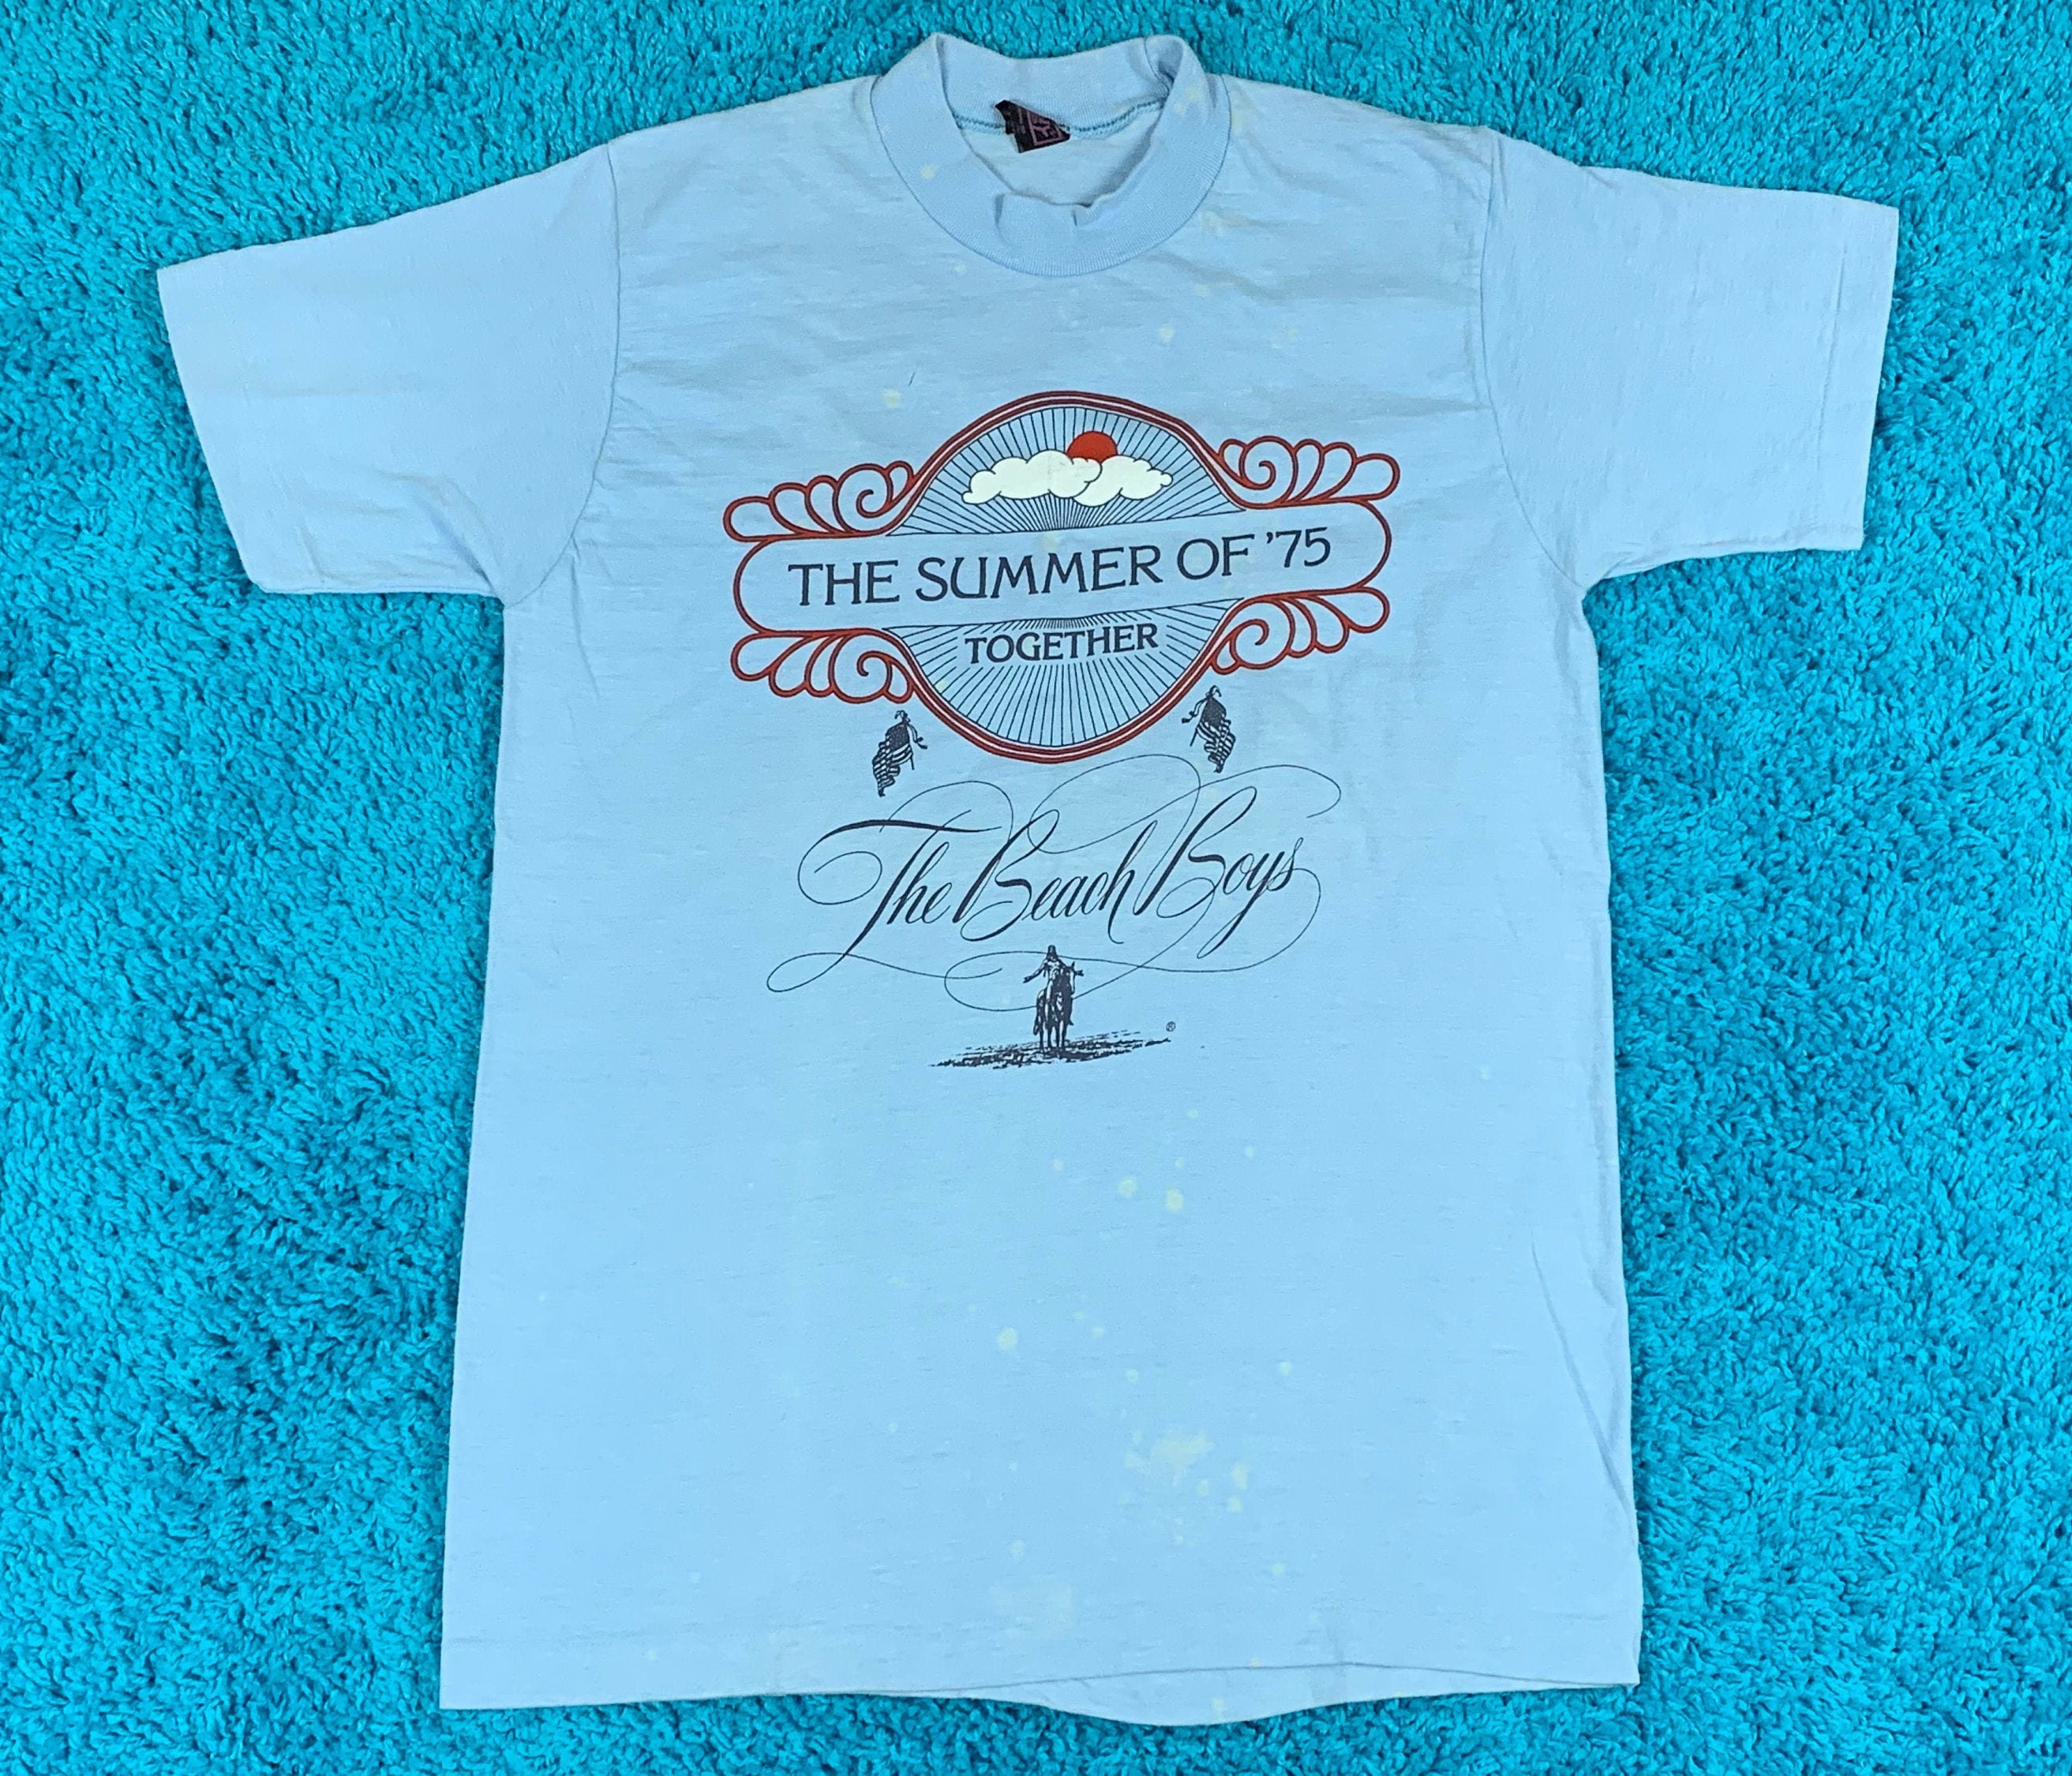 M * vtg 70s 1975 The Beach Boys / Chicago summer tour t shirt * 8.136